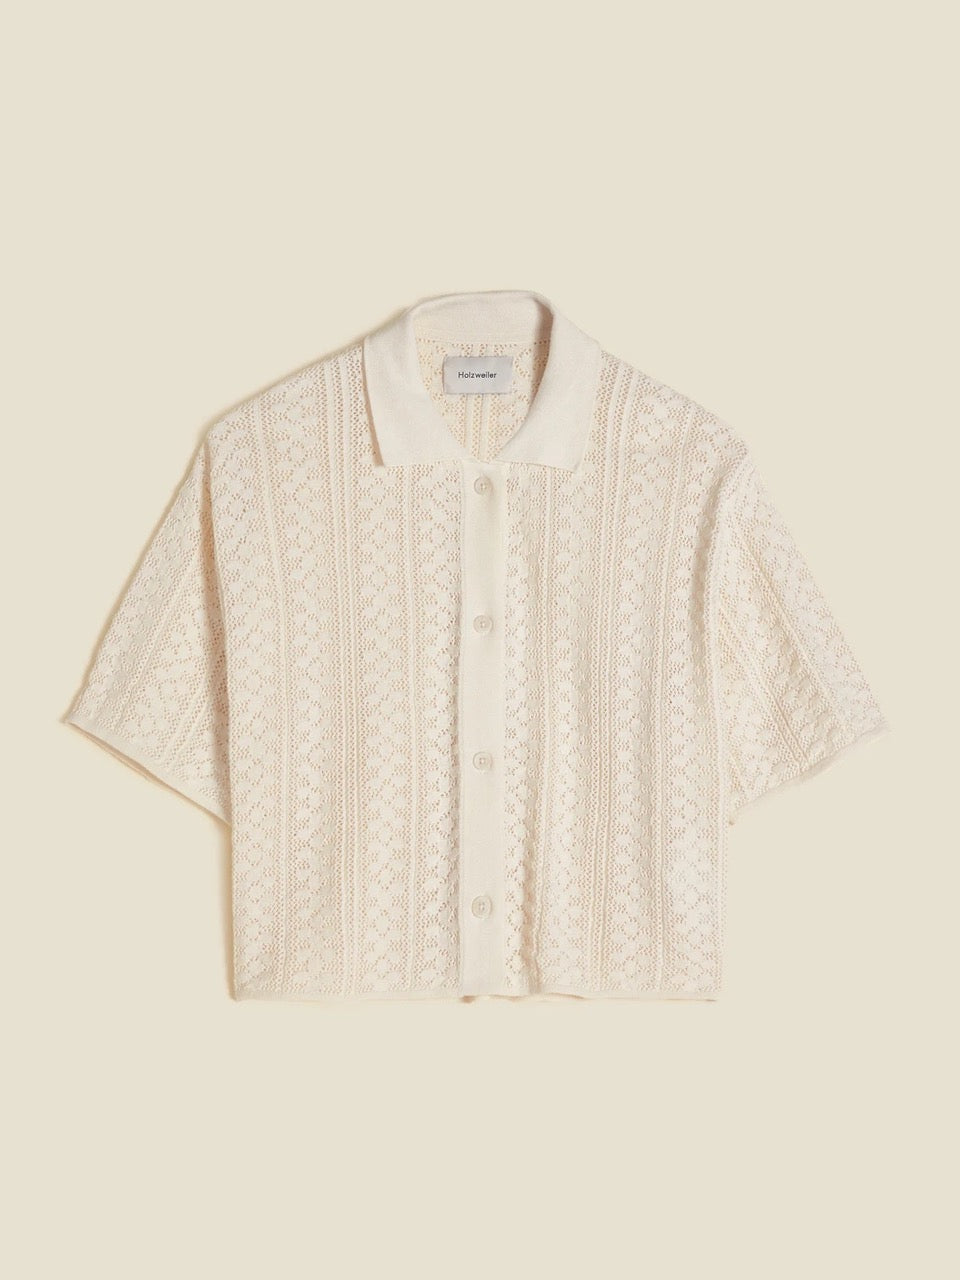 Loch Crochet Knit Shirt  White